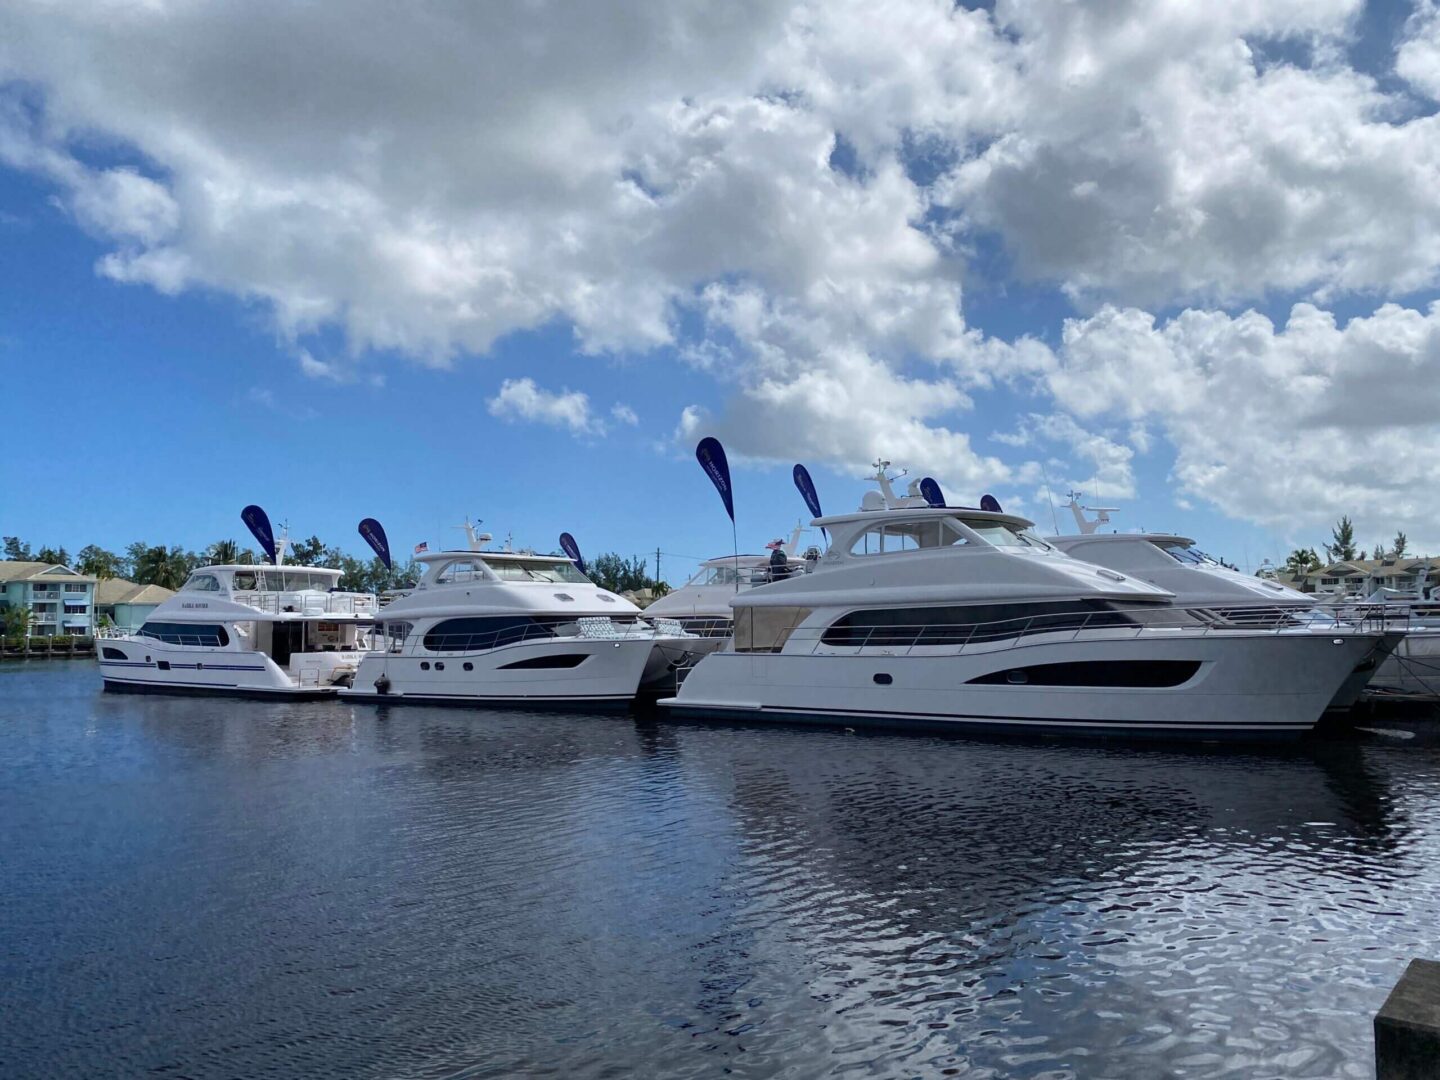 three yachts parked